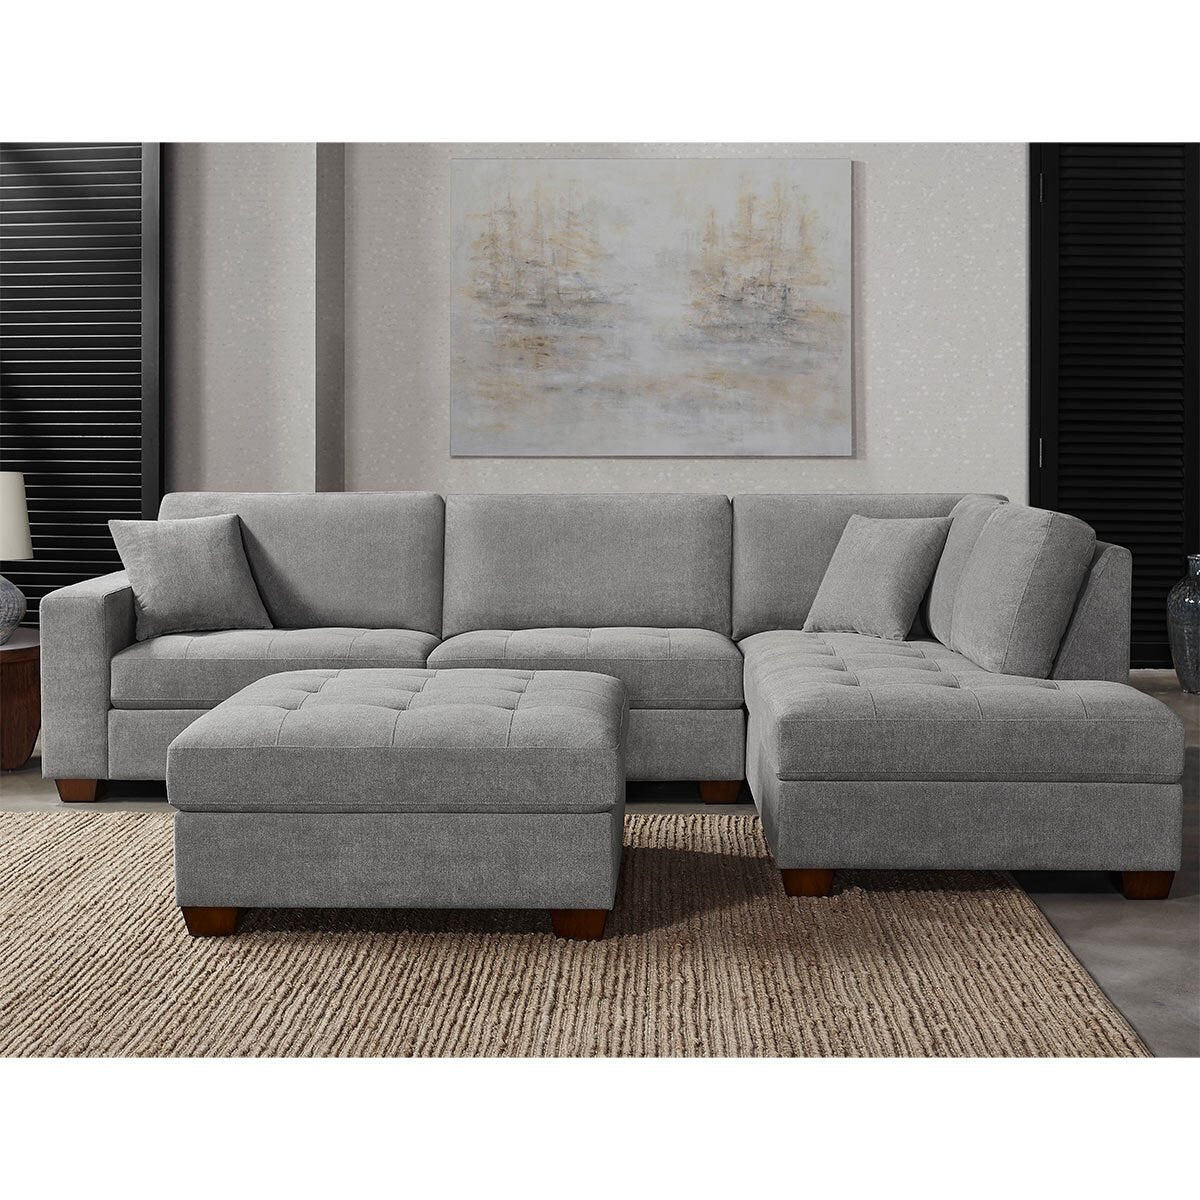 Thomasville Miles Grey Fabric Corner Sofa with Storage Ottoman - Signature Retail Stores